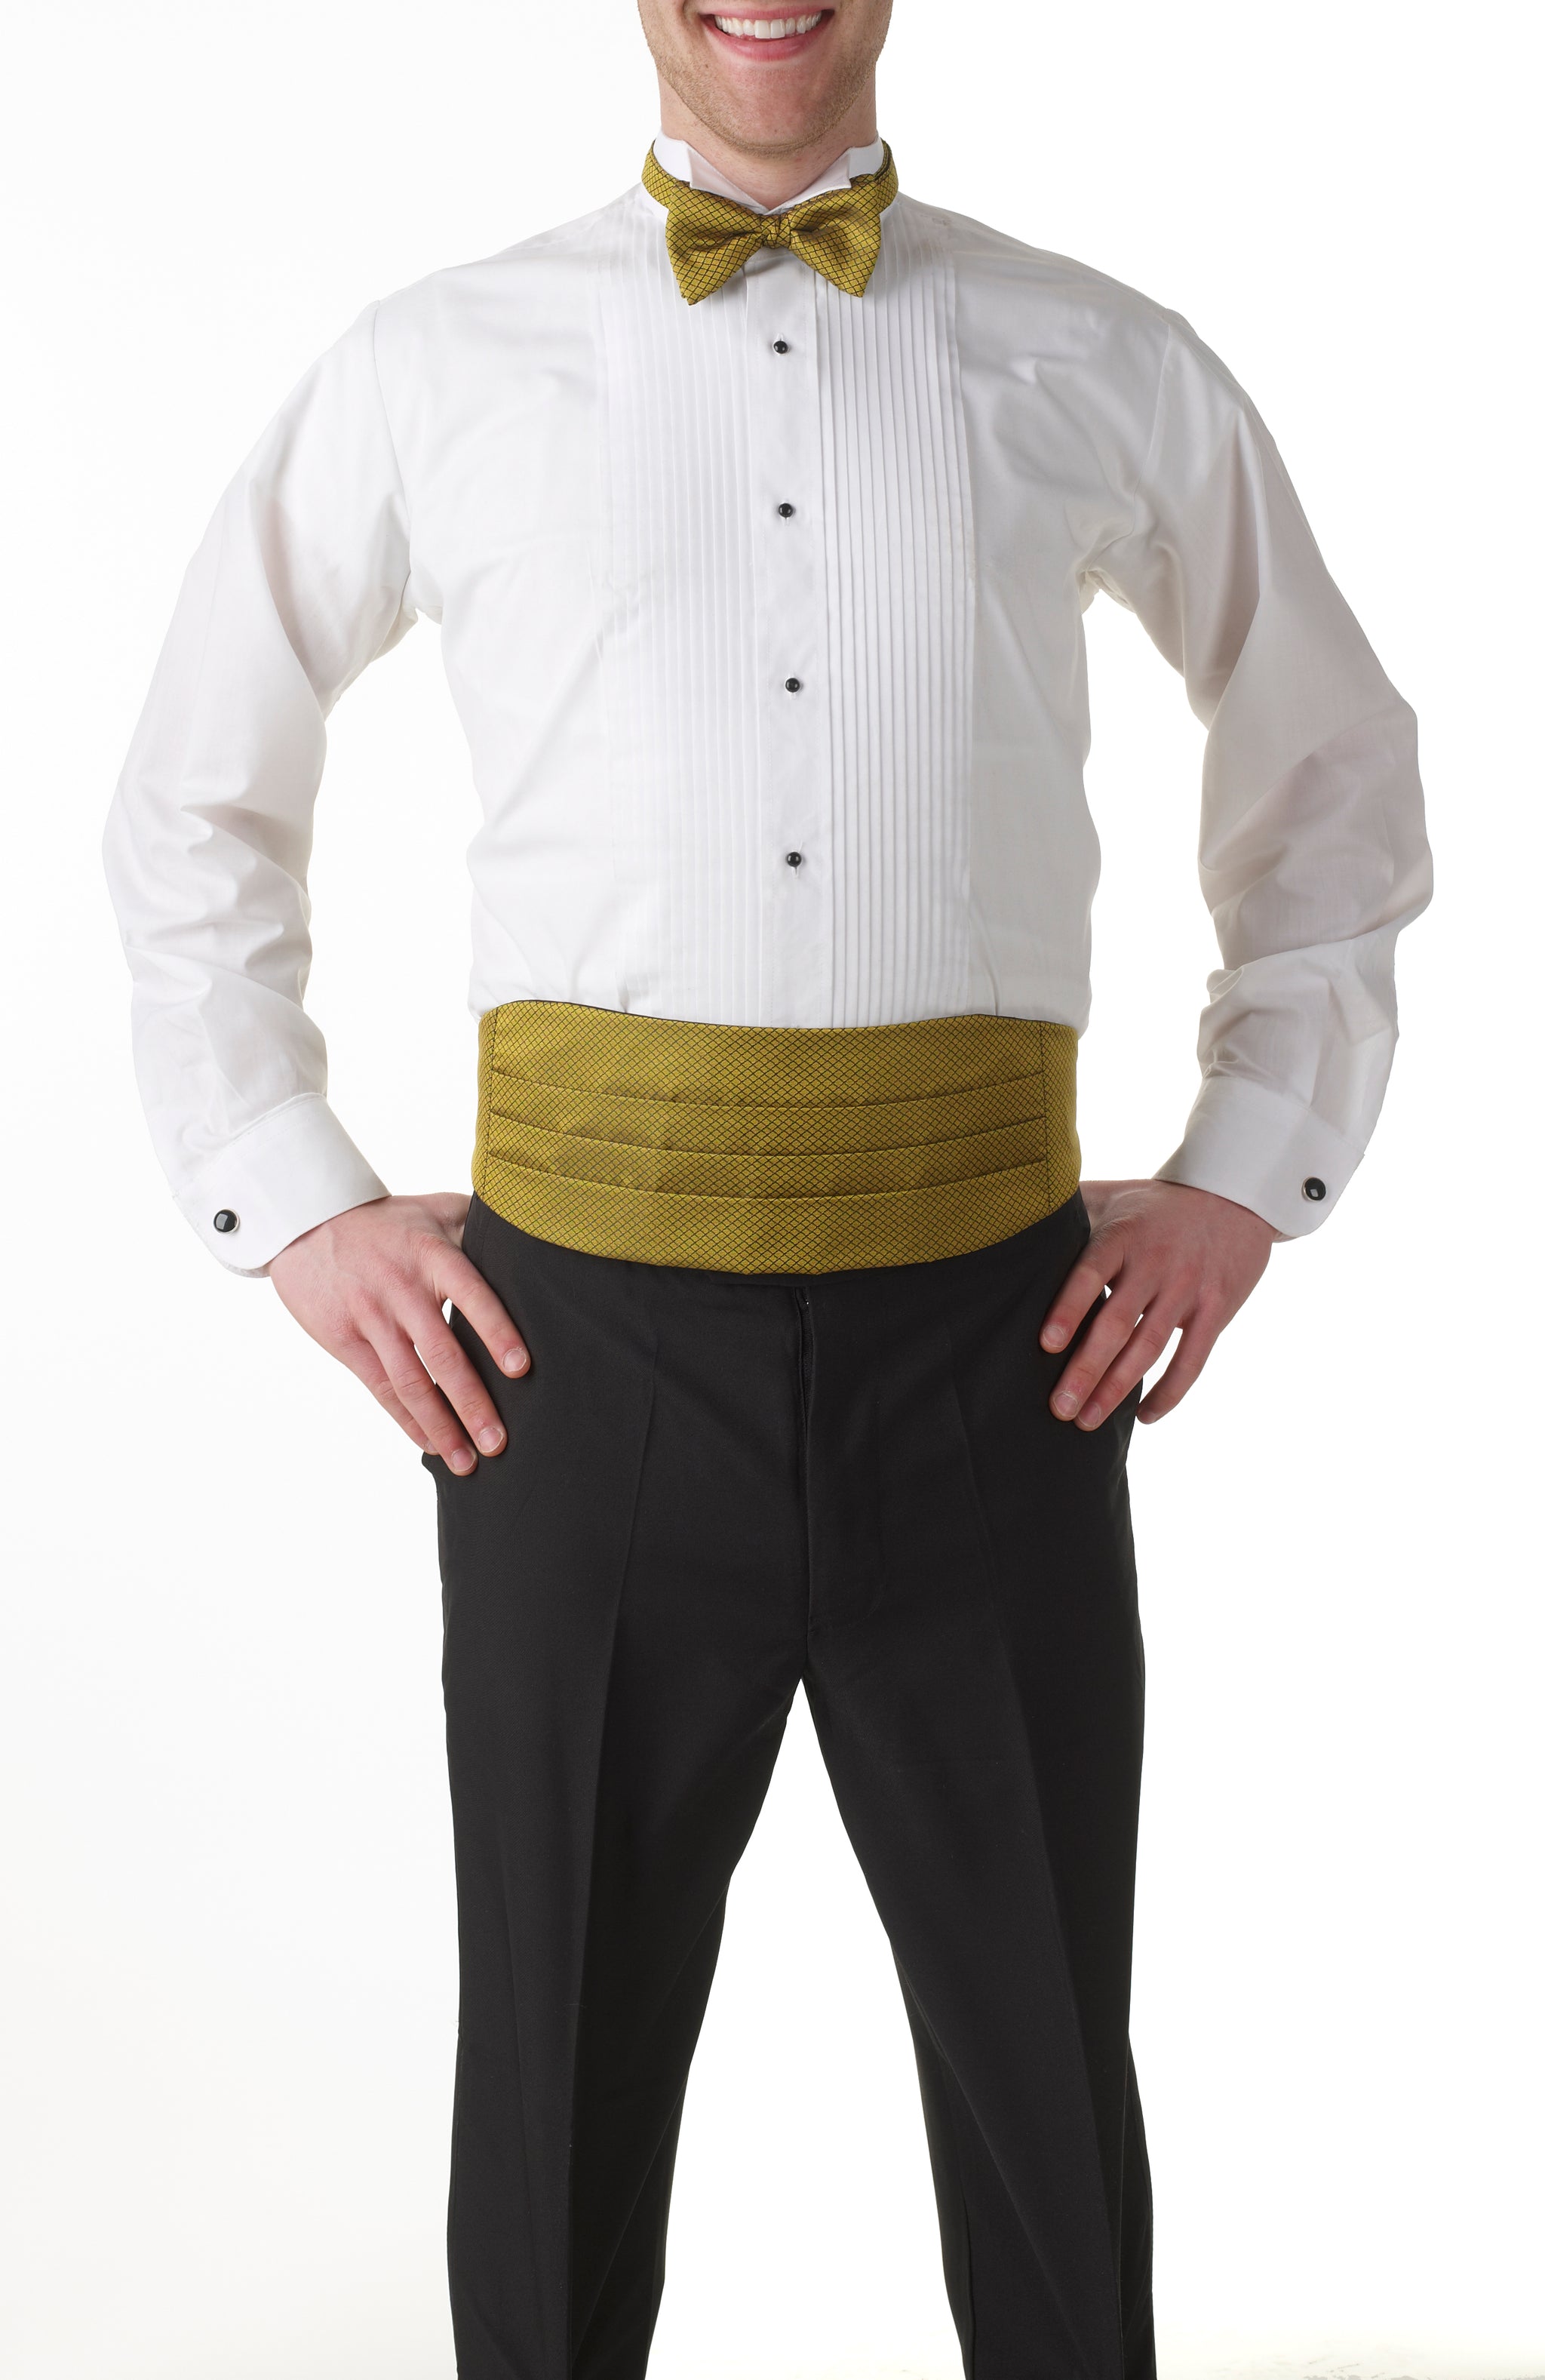 Men's Black, Flat Front, Comfort-Waist Tuxedo Pants with Satin Stripe -  99tux